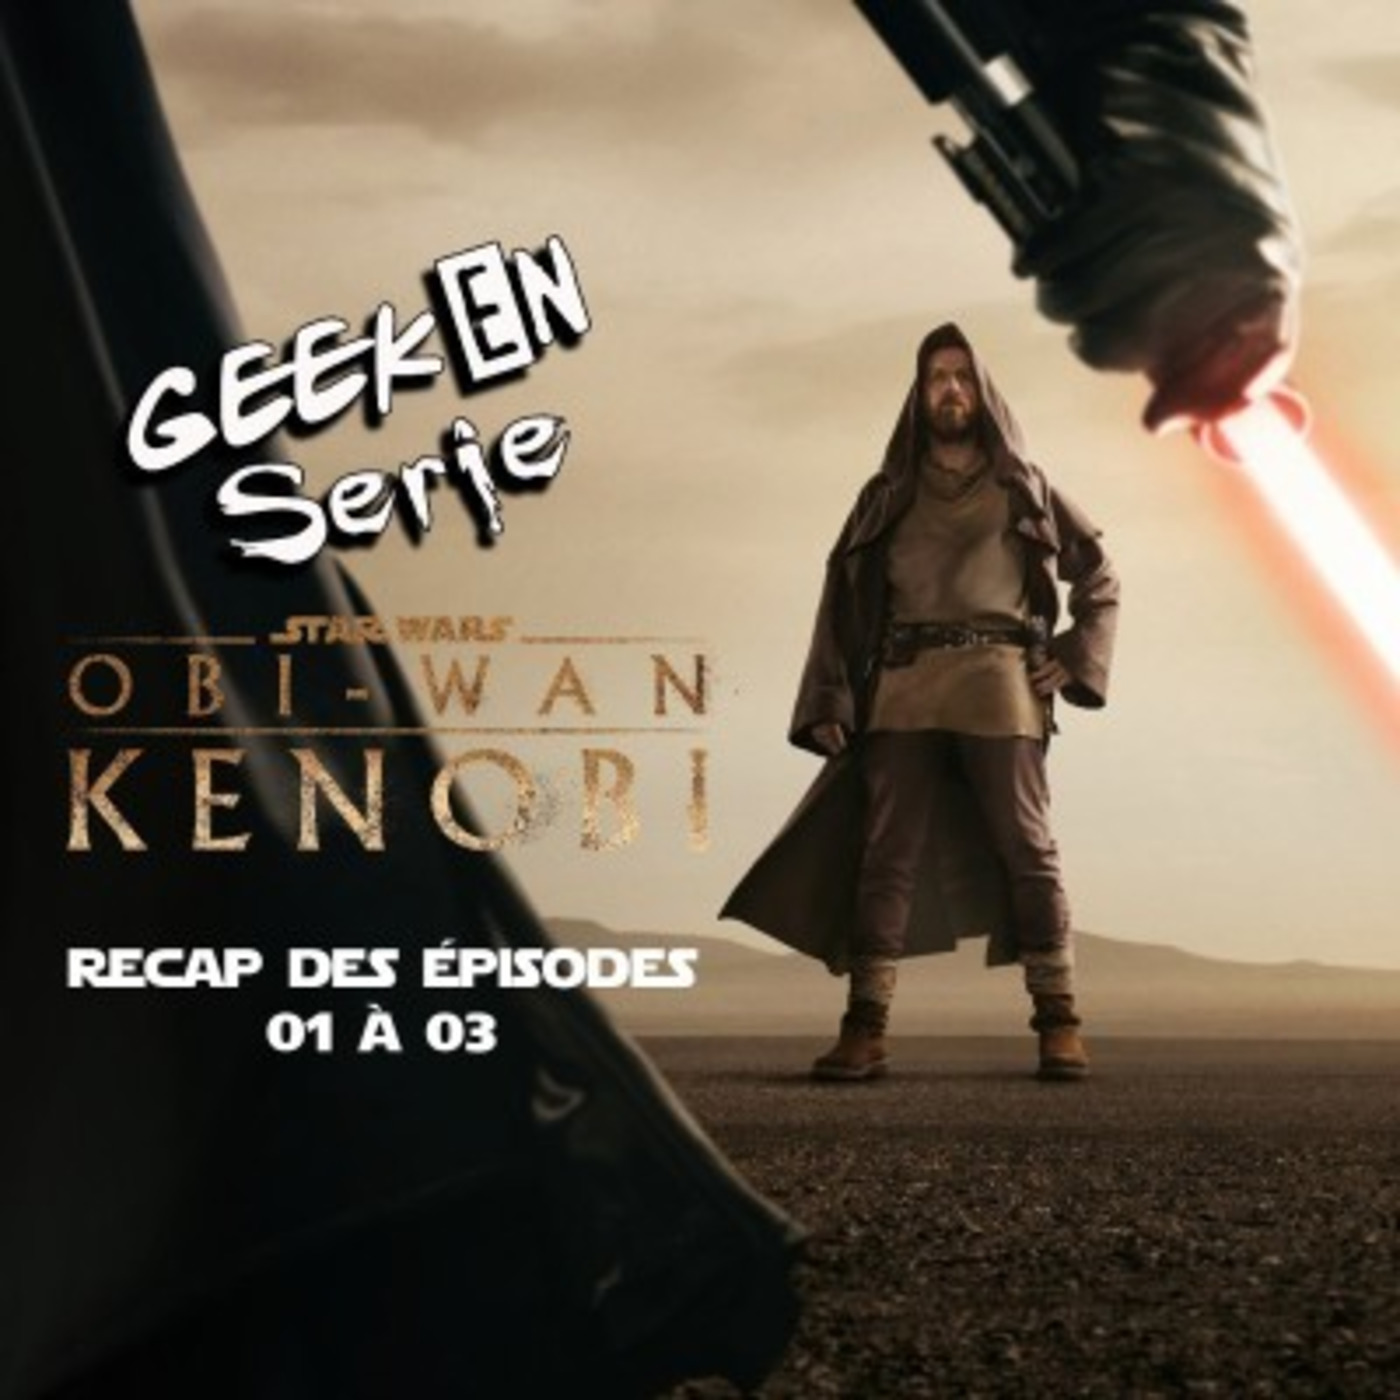 Geek en série récap: Obi-Wan Kenobi partie 1